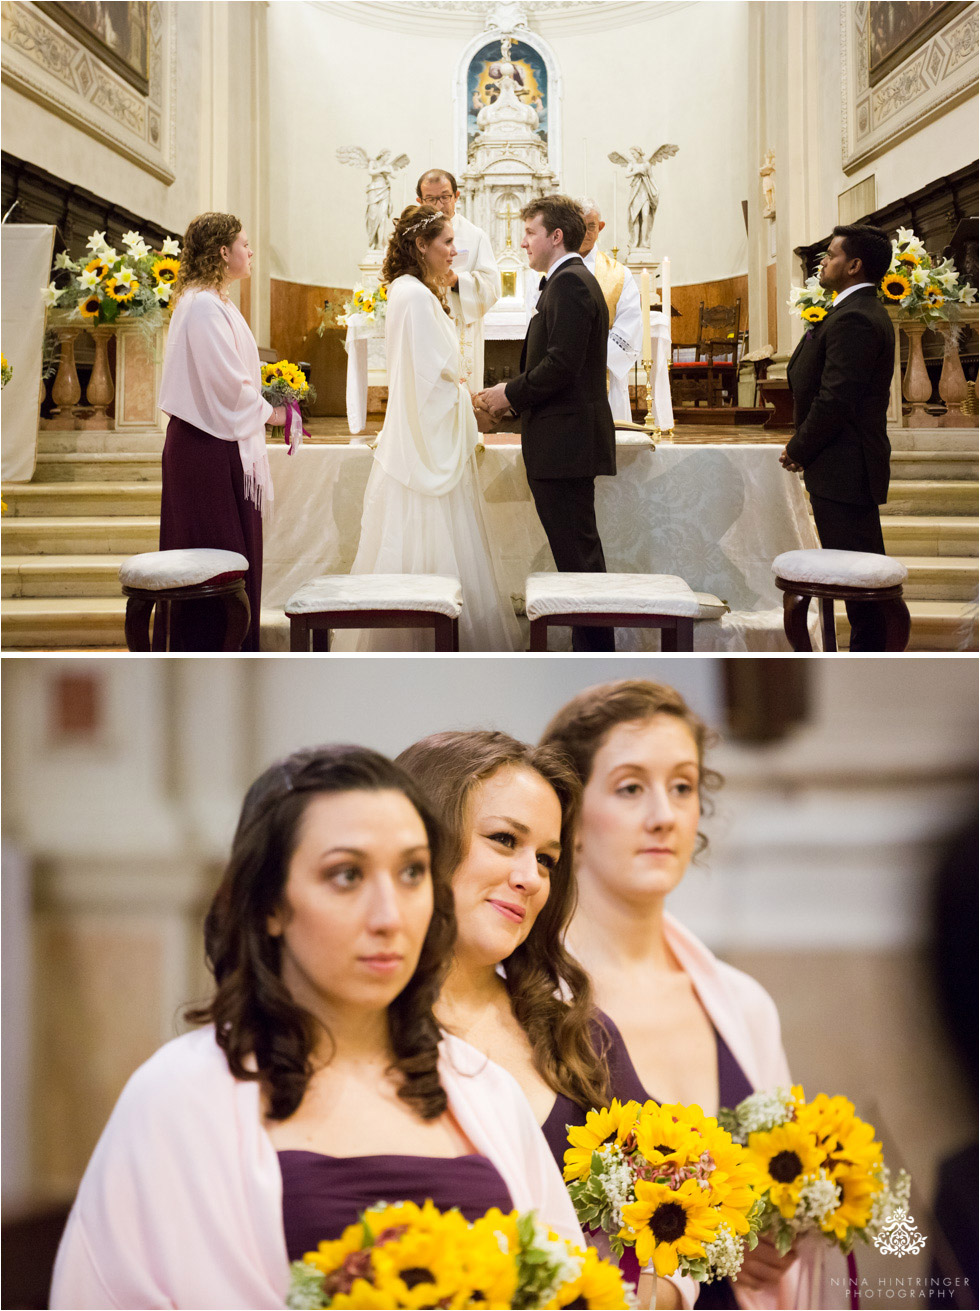 Bridal couple, maid of honor, groomsman and bridesmaids - Blog of Nina Hintringer Photography - Wedding Photography, Wedding Reportage and Destination Weddings